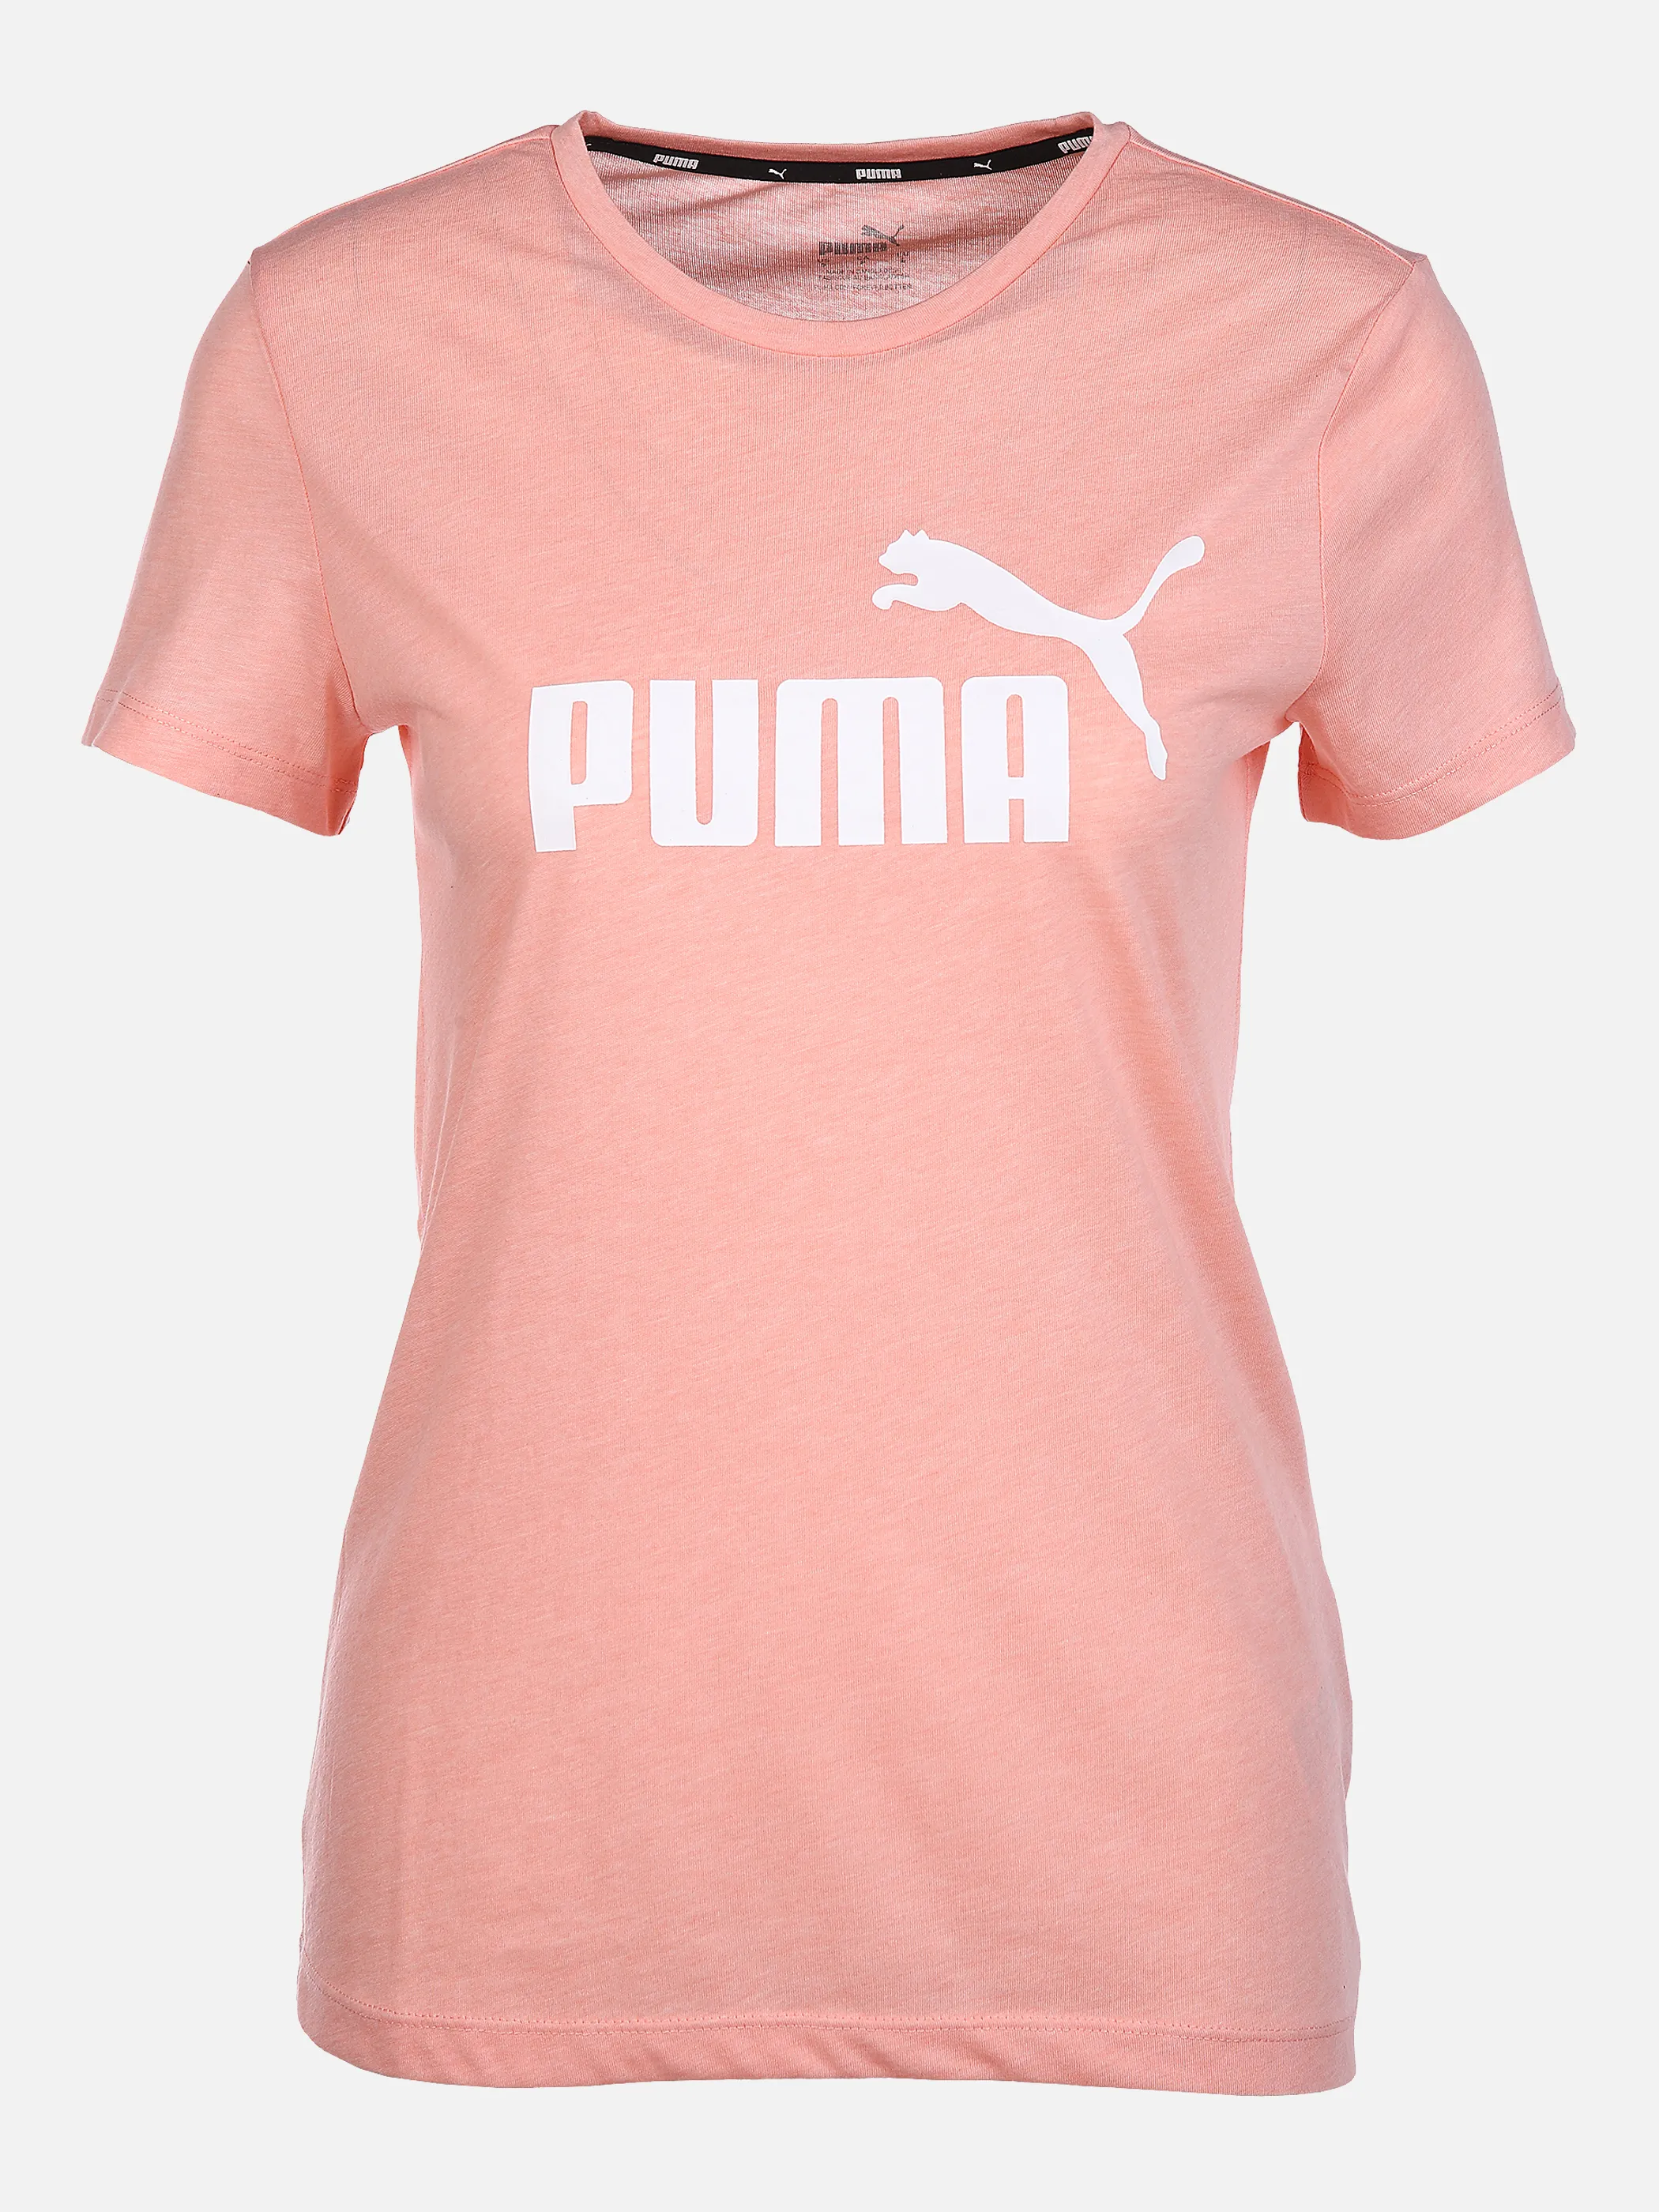 Puma 586876 Da-T-Shirt Orange 846539 26 1